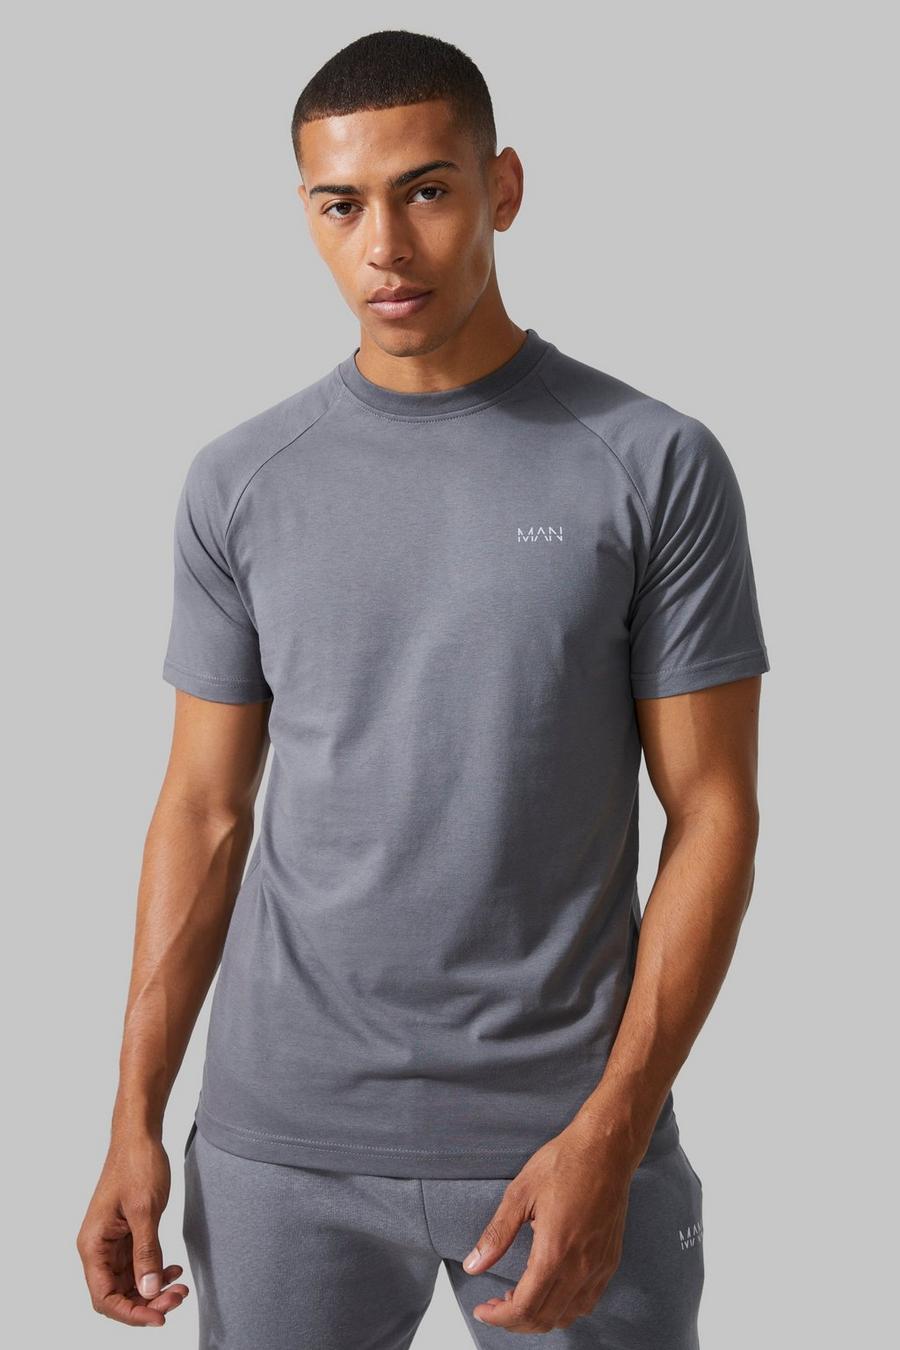 Charcoal grau Man Active Raglan Fitness T-Shirt